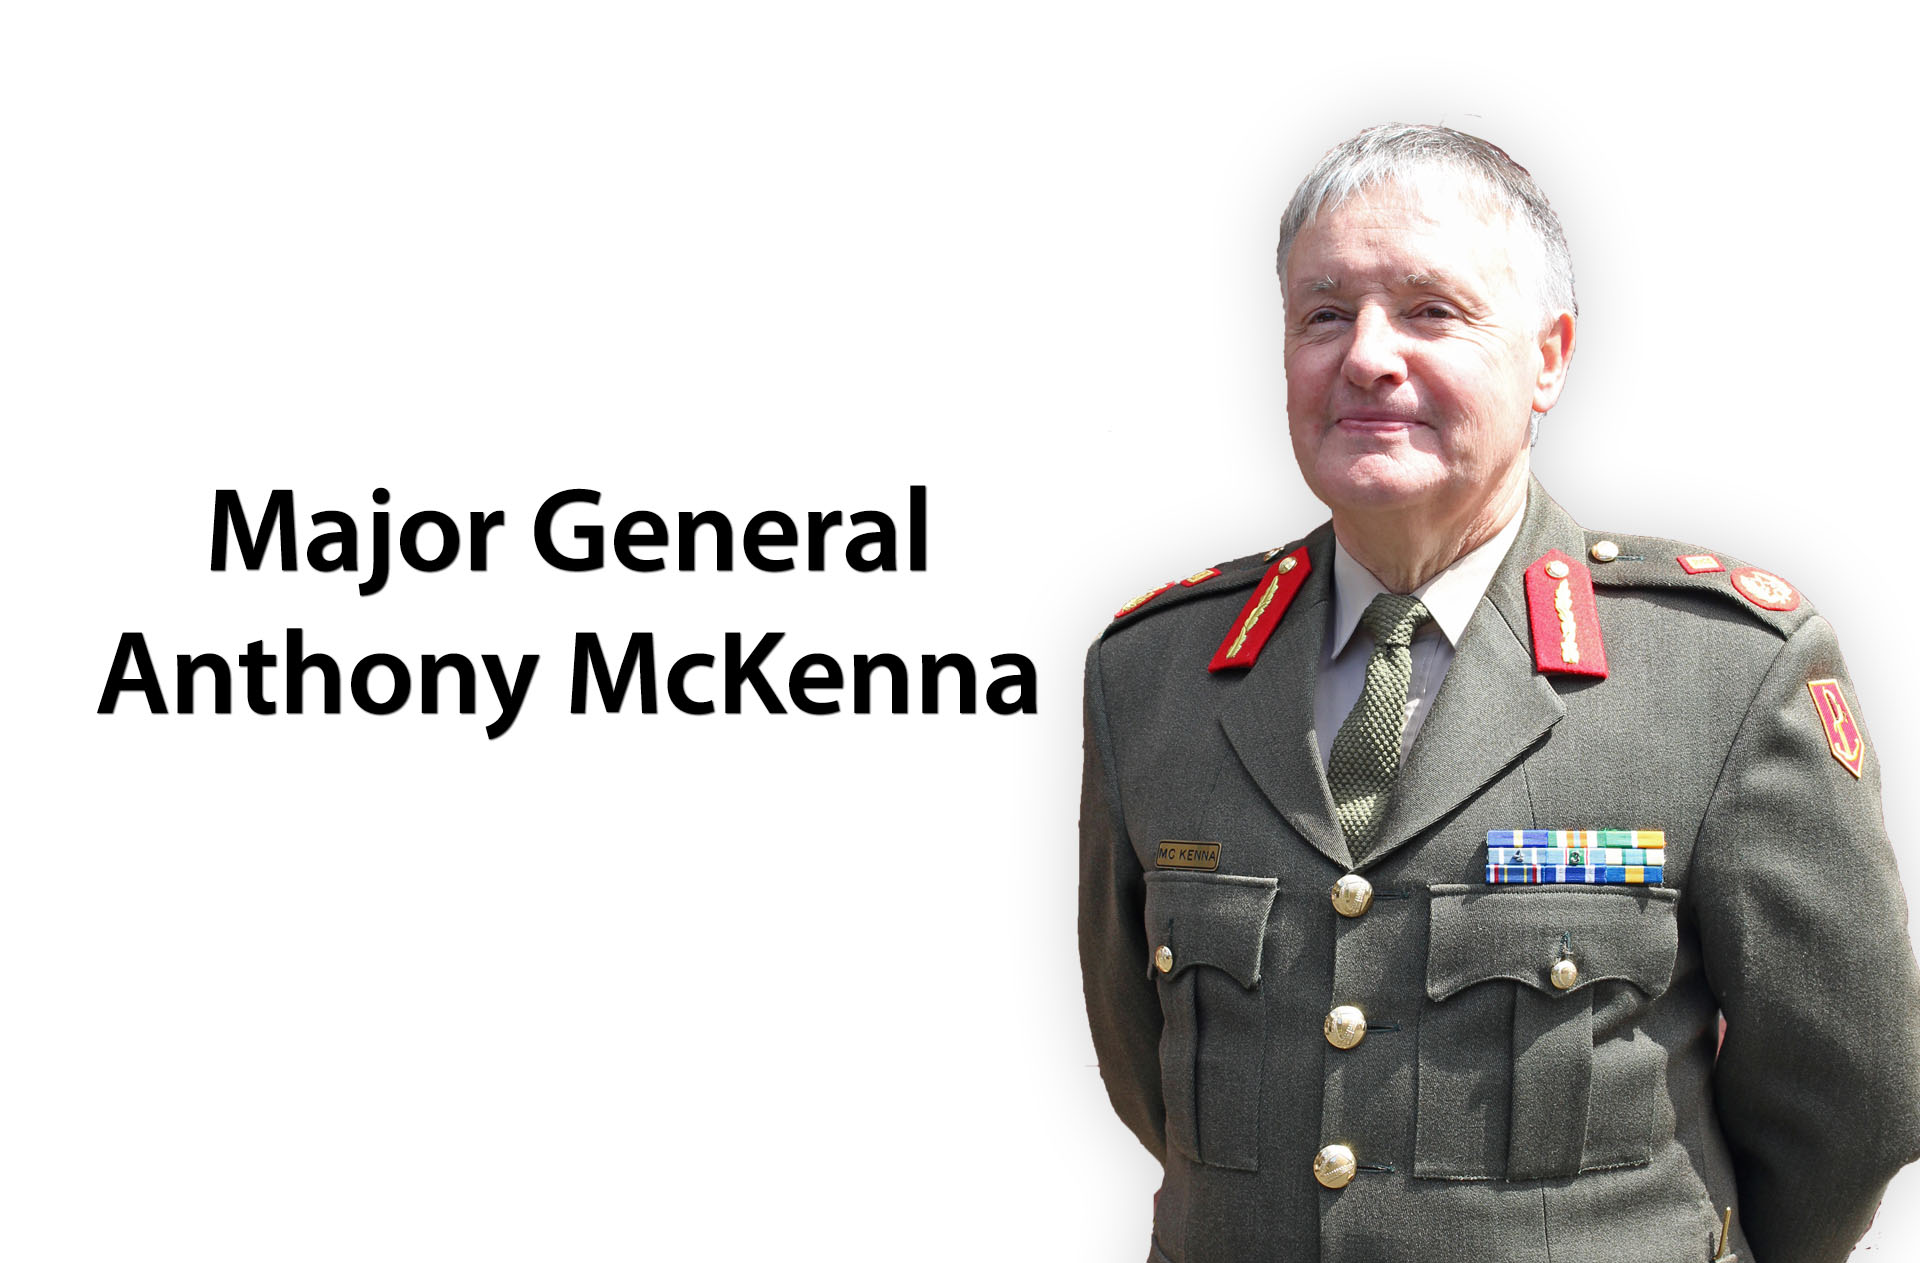 Major General Anthony McKenna